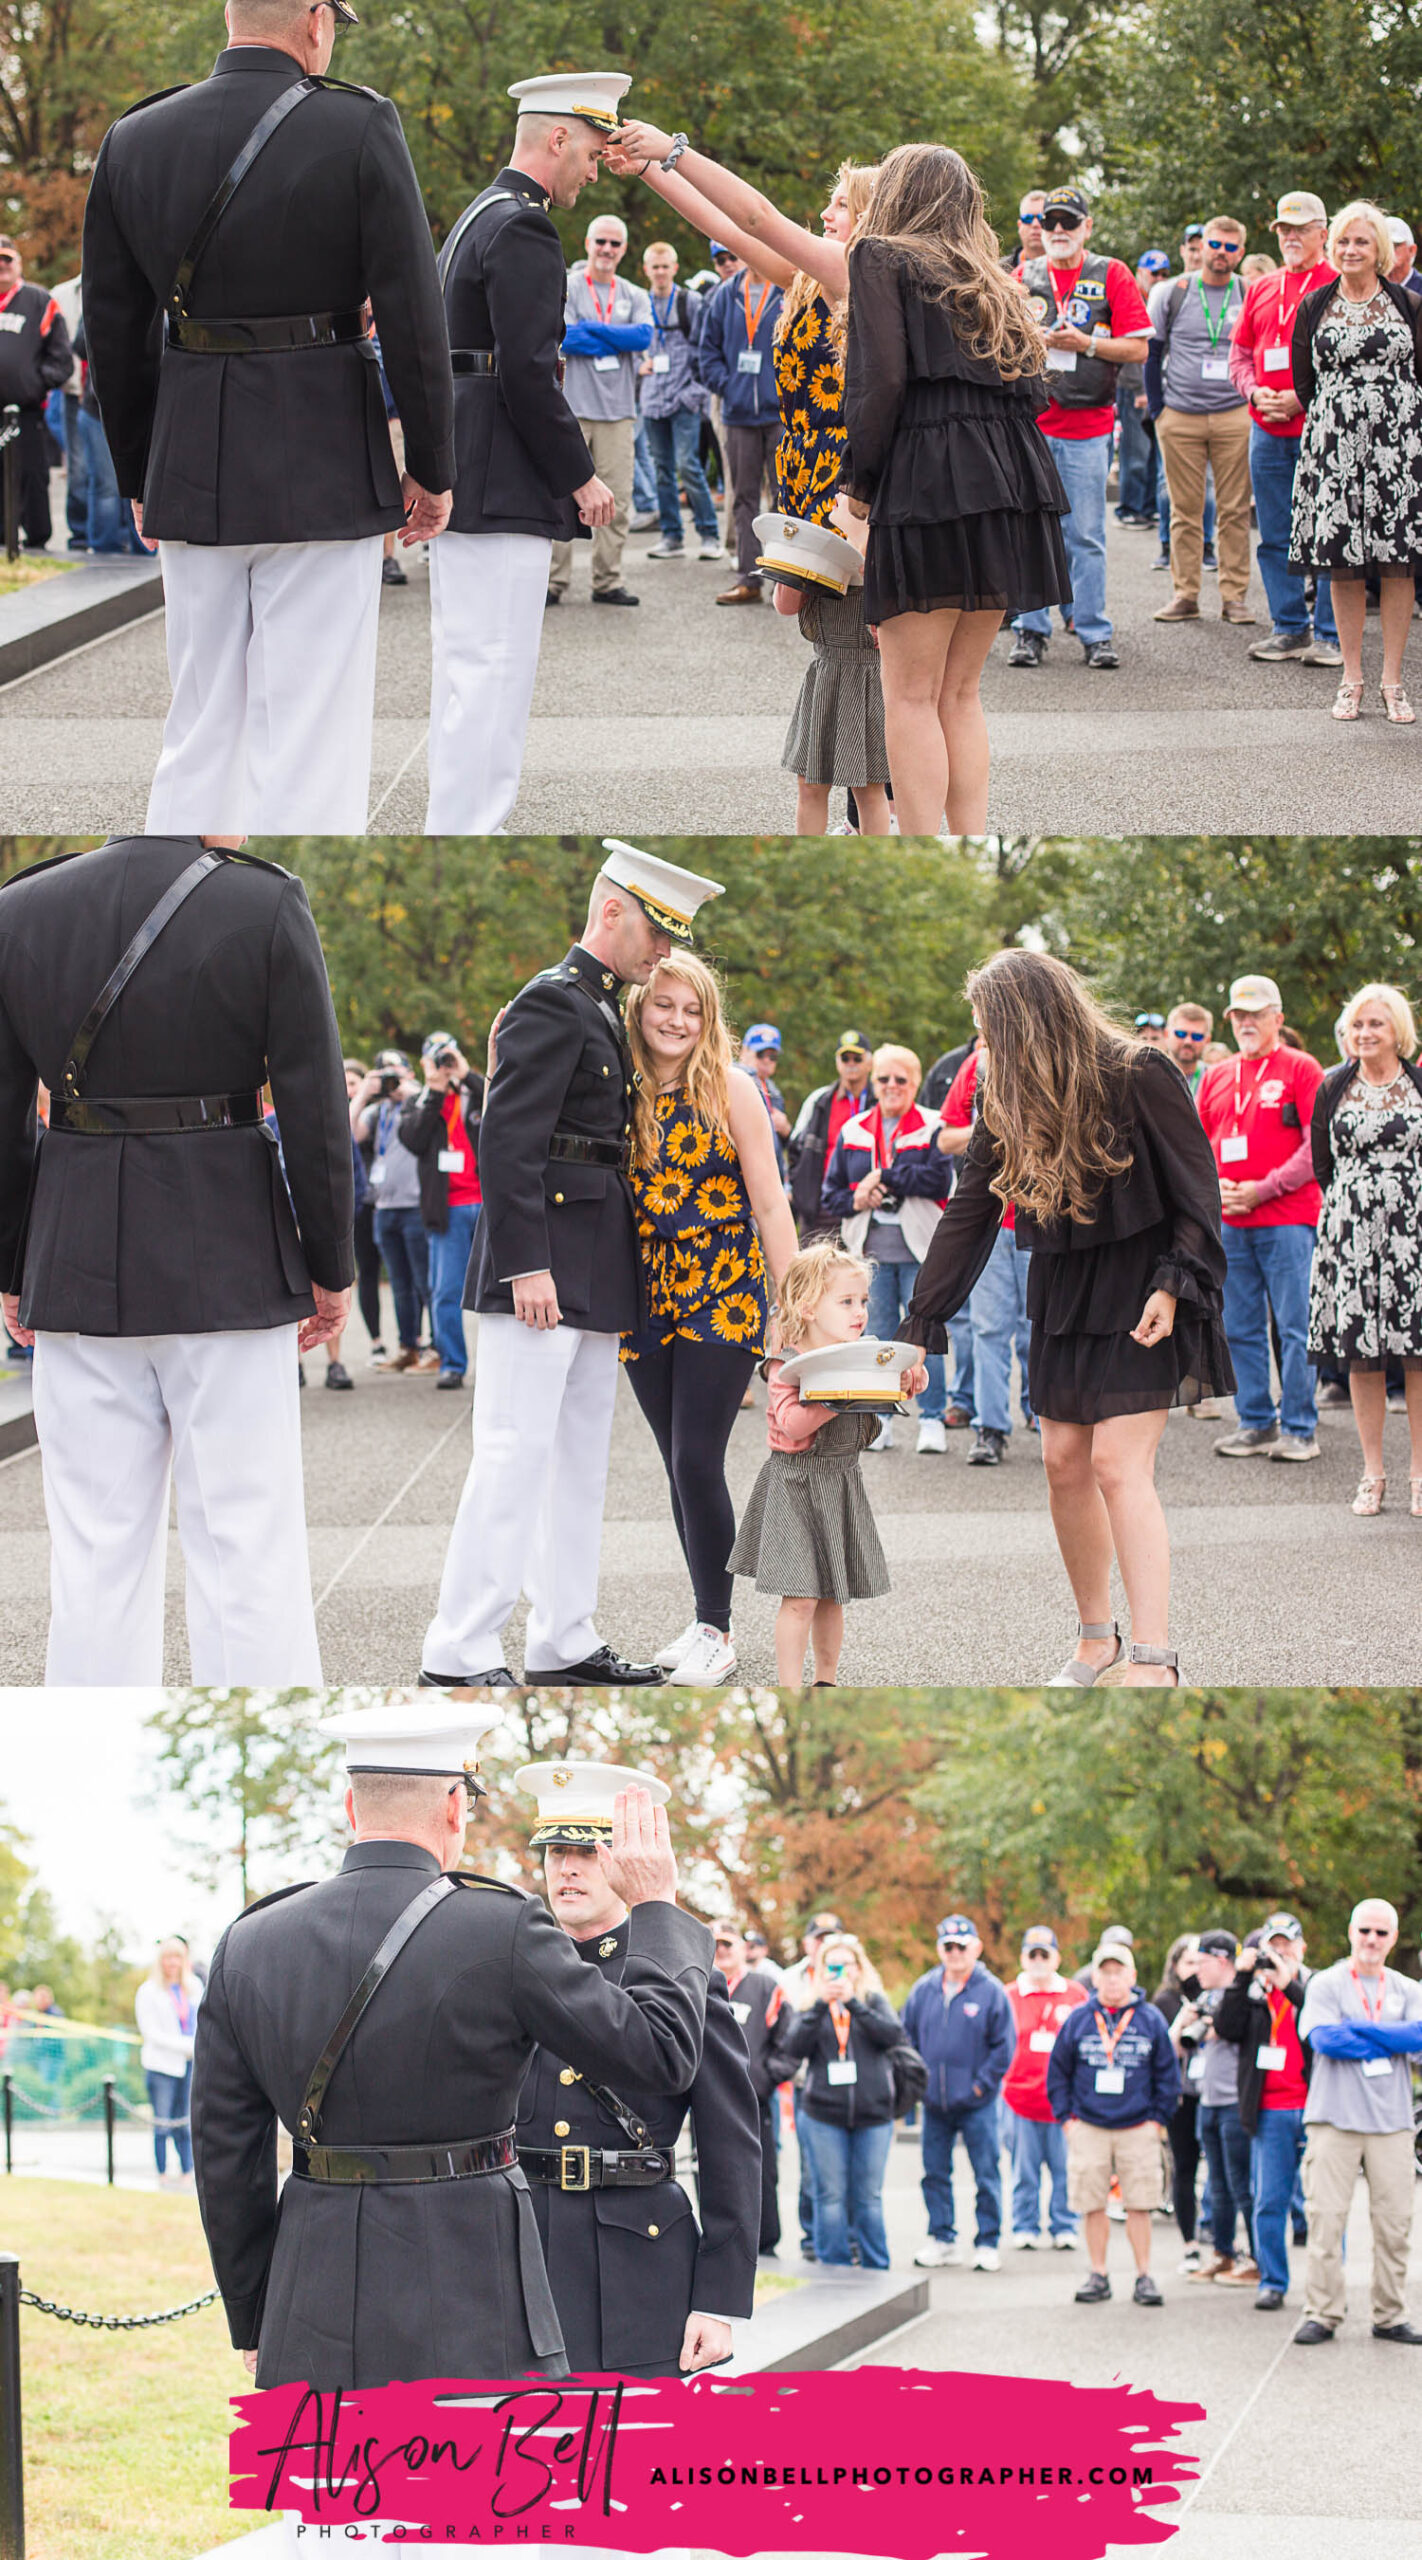 marine corps pinning ceremony war memorial dc